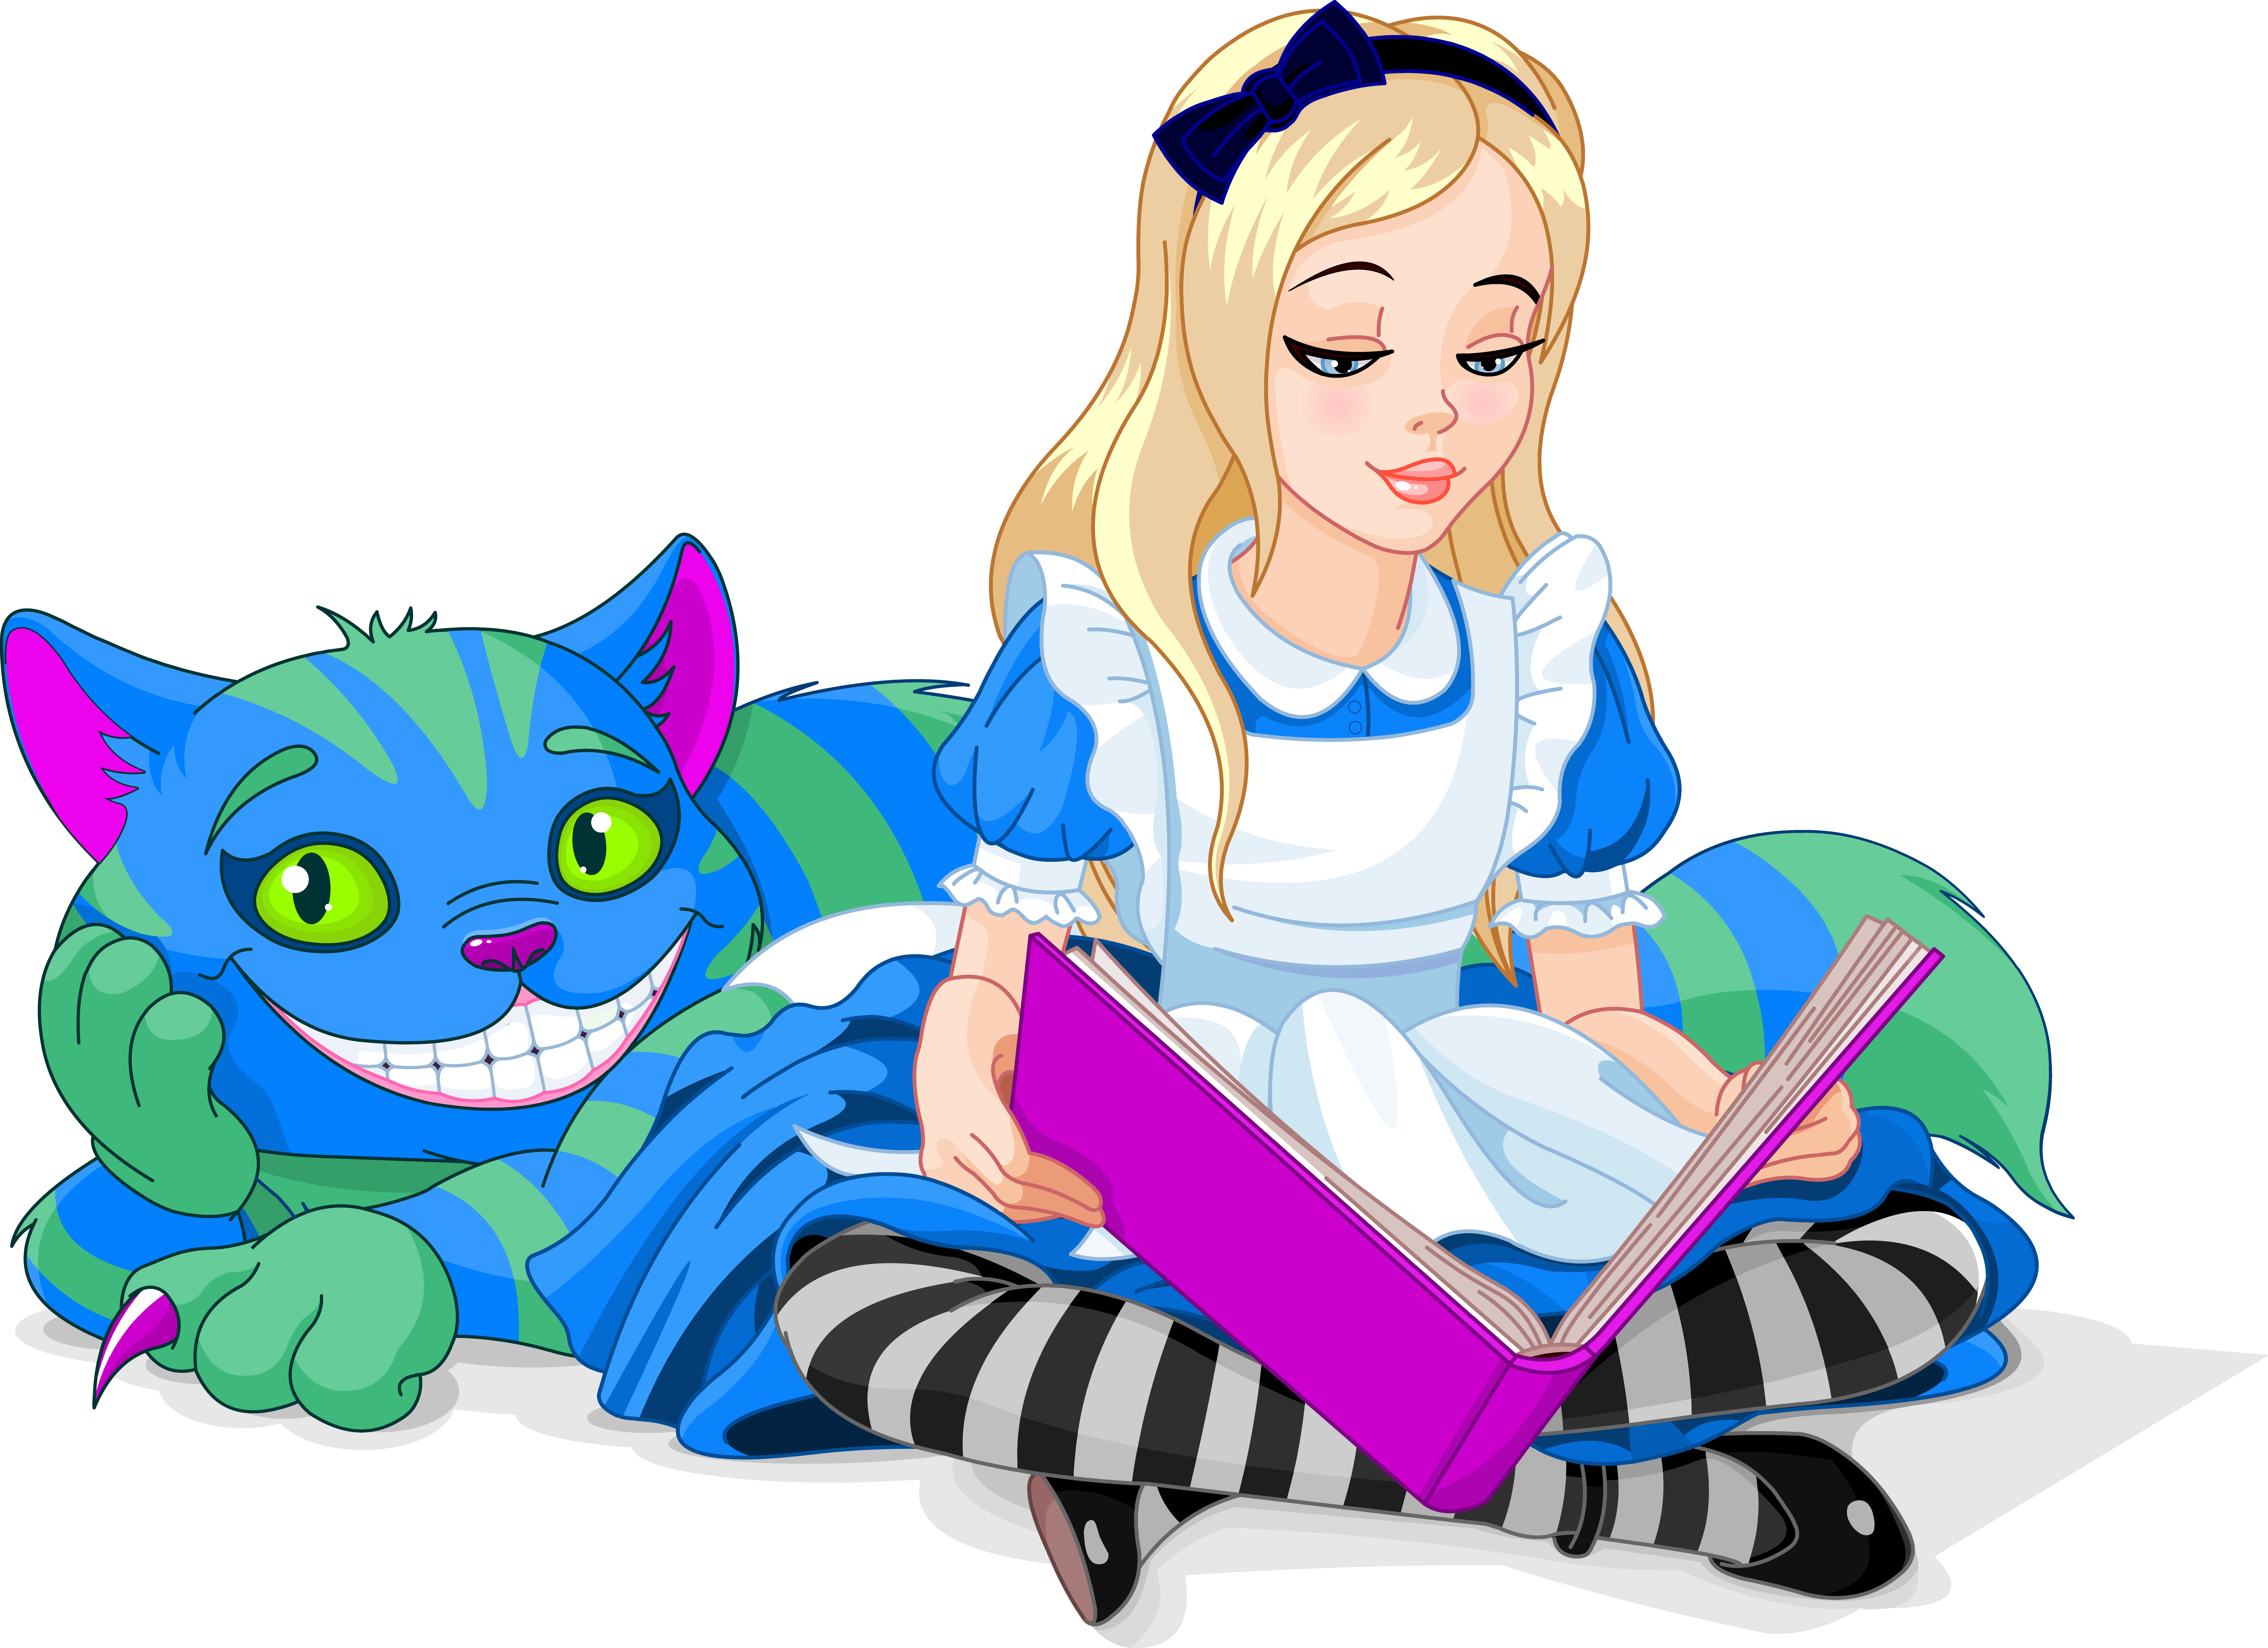 Алиса в стране чудес Чеширский кот и Алиса. Алиса и кот Чешир в стране чудес. Алиса в стране чудес кот и Алиса. Алиса в стране чудес Алиса читает книгу.